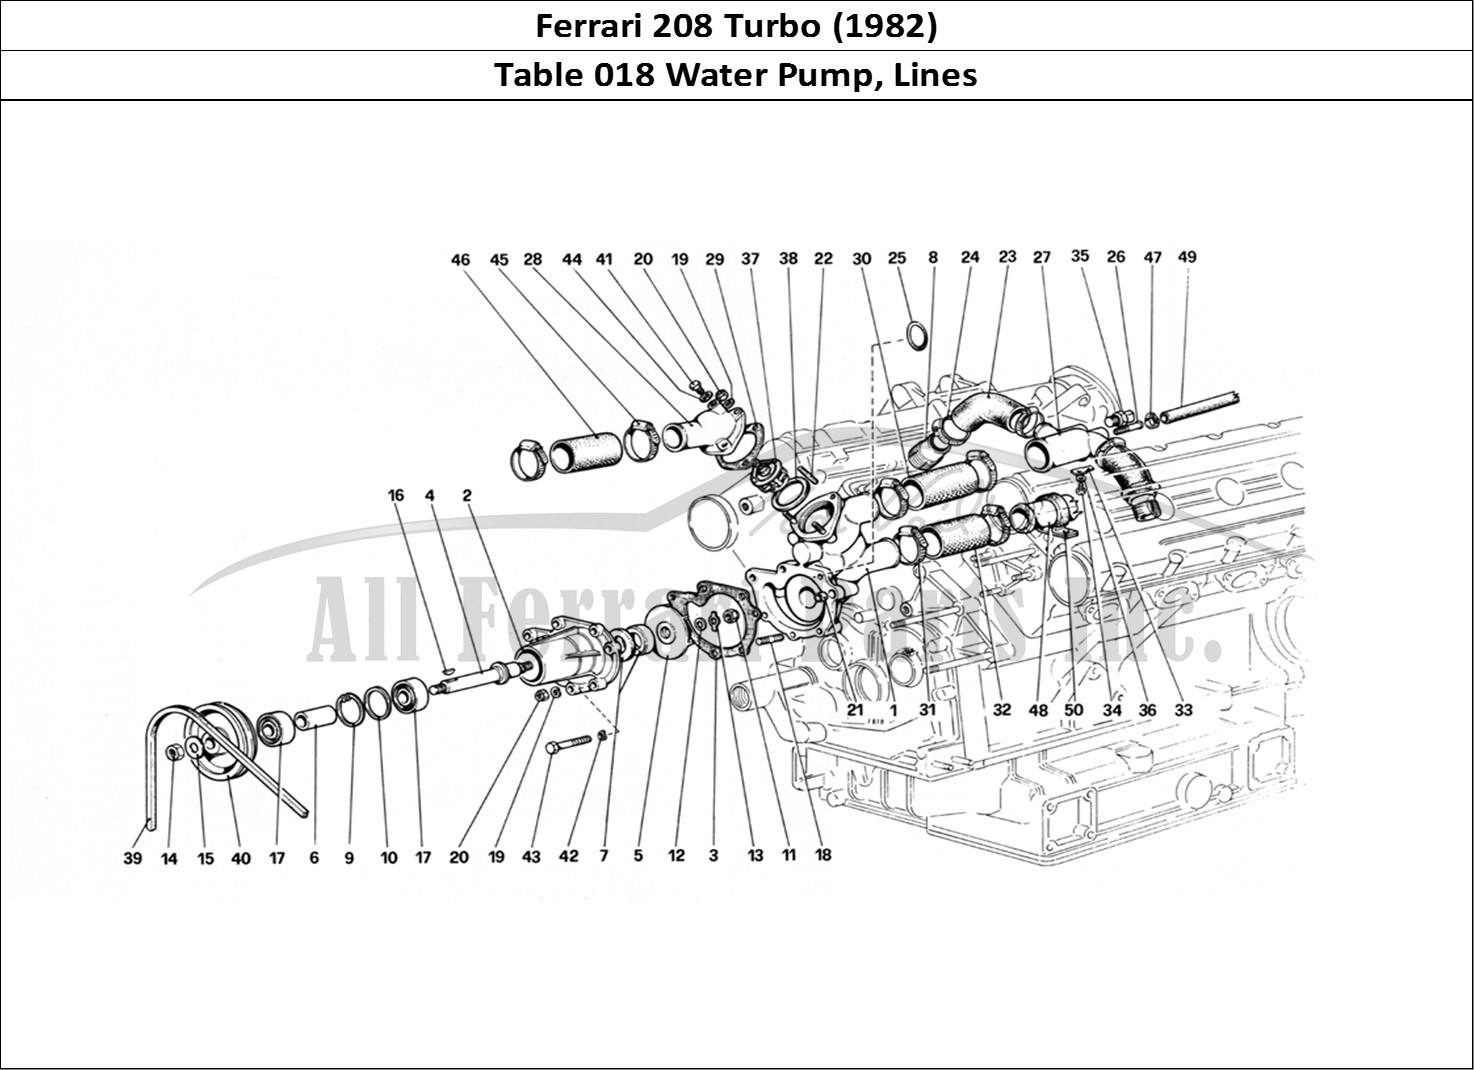 Ferrari Parts Ferrari 208 Turbo (1982) Page 018 Water Pump and Pipings